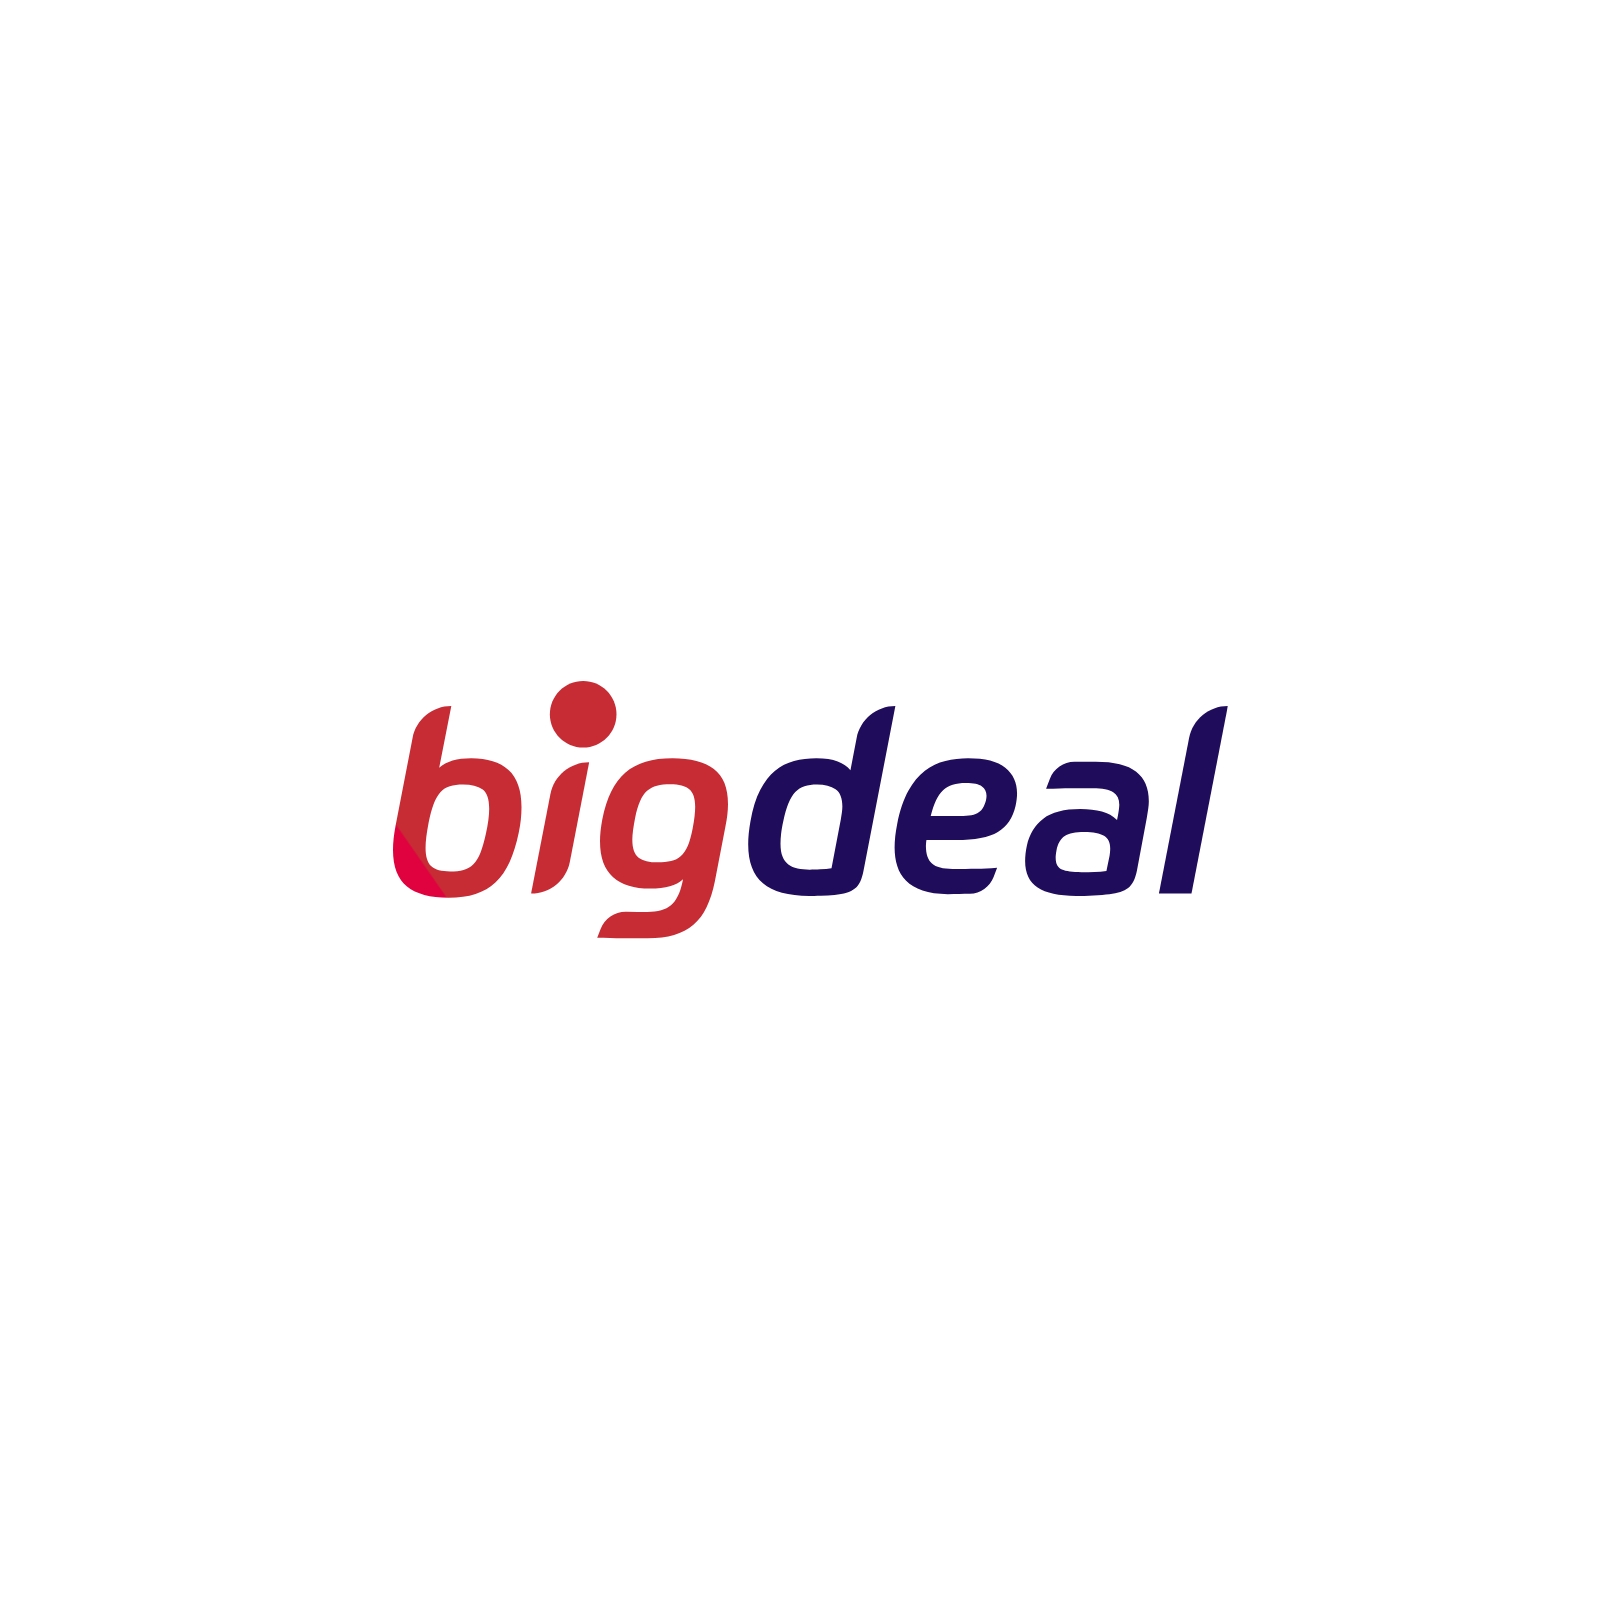 Designing a logo for BigDeal